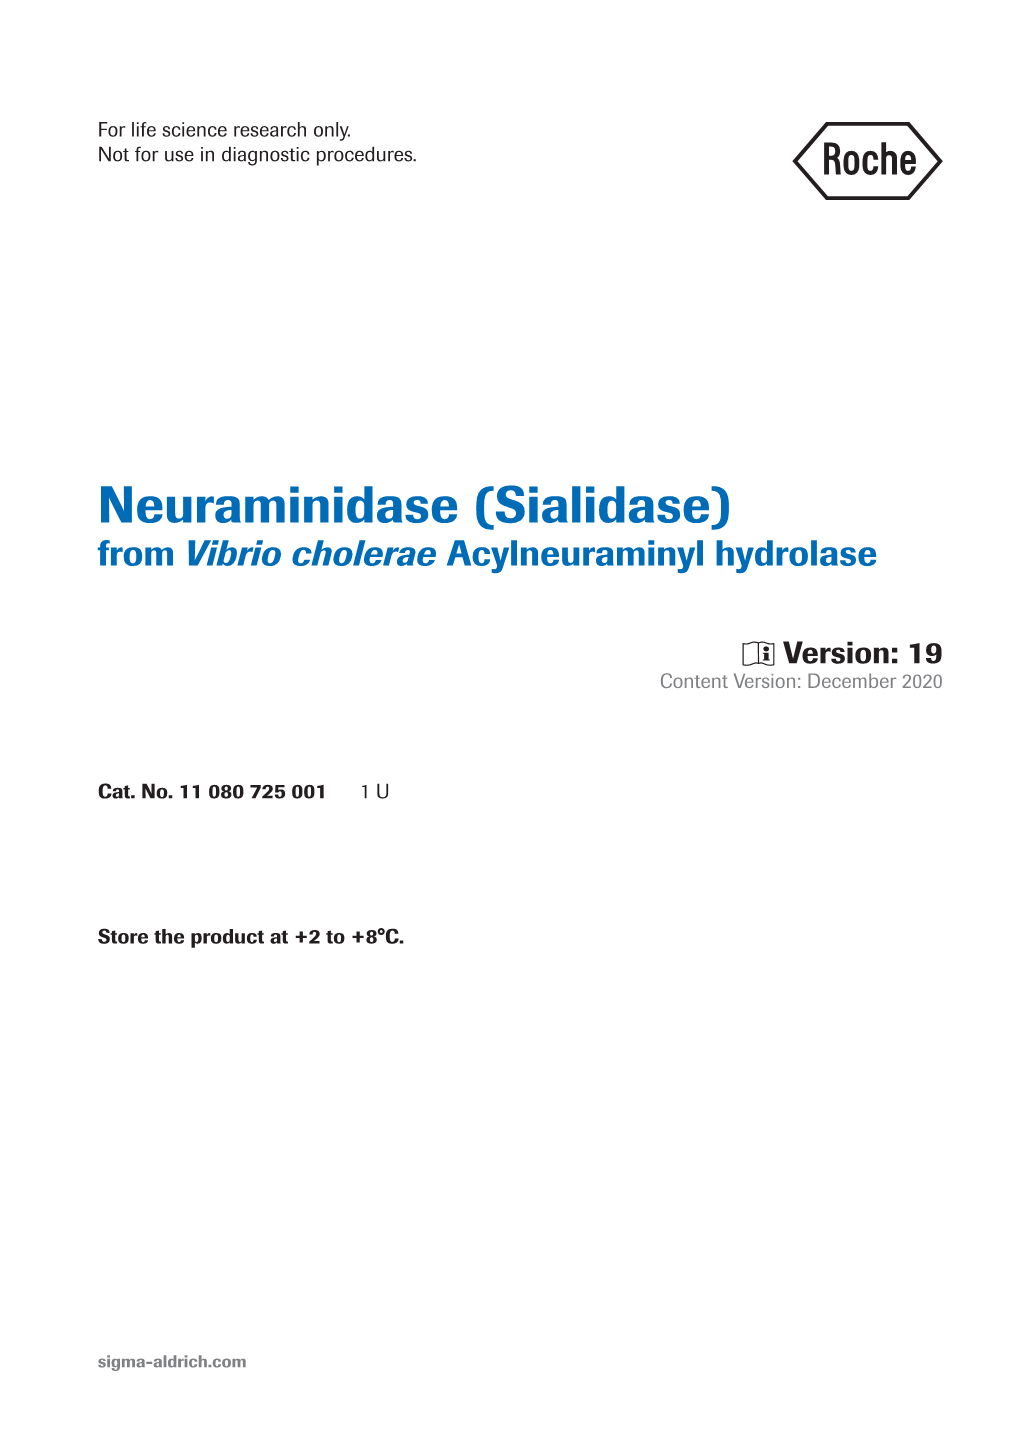 Neuraminidase (Sialidase) from Vibrio Cholerae Acylneuraminyl Hydrolase